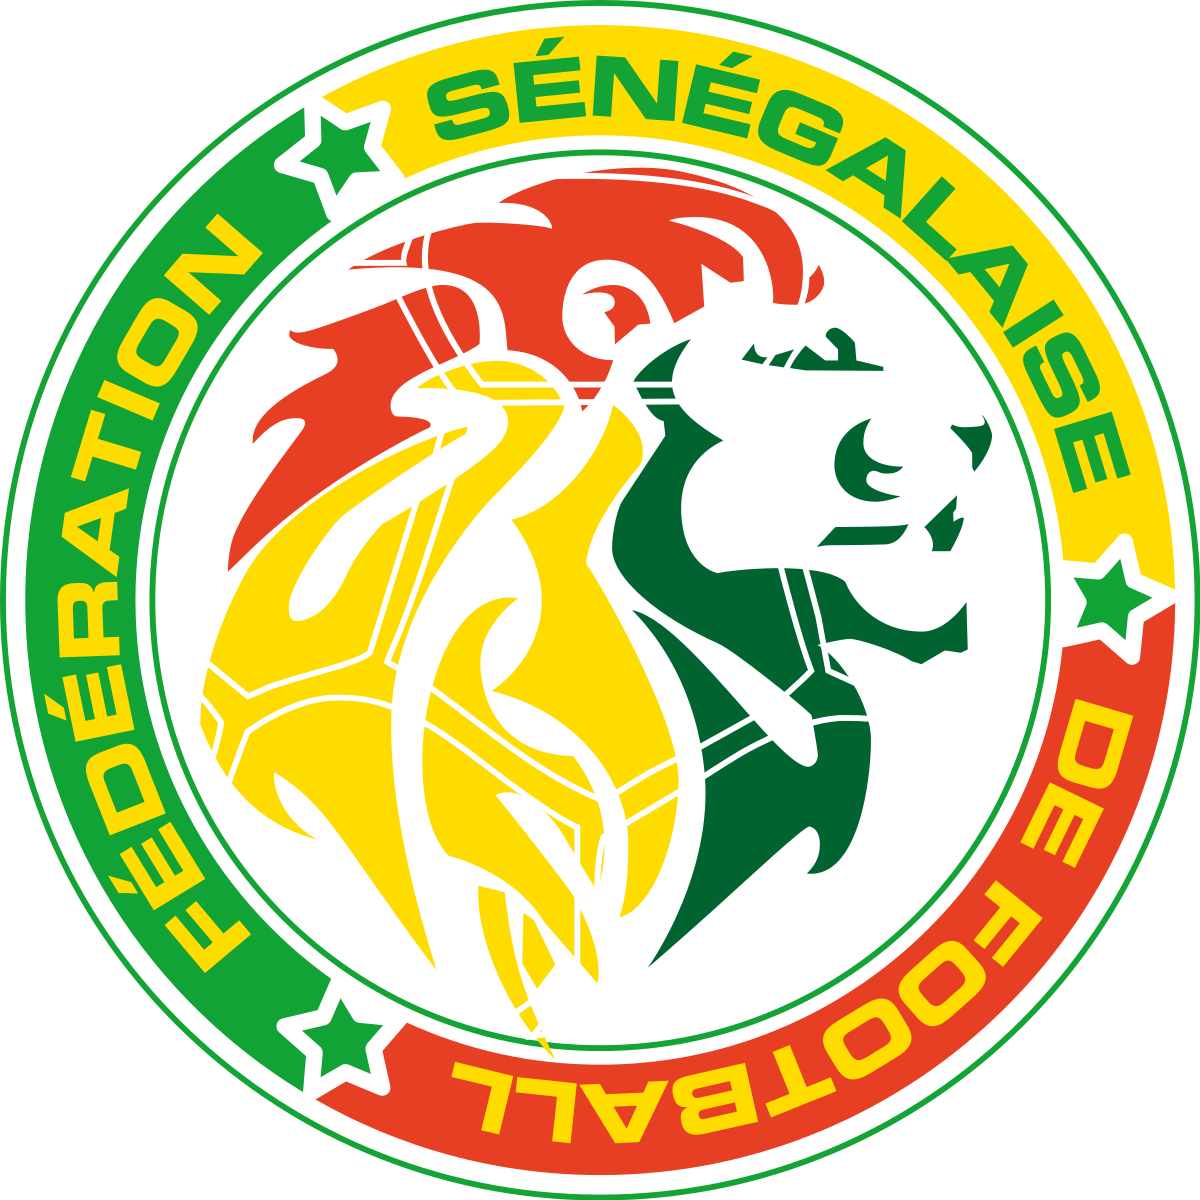 federation senegalaise de football